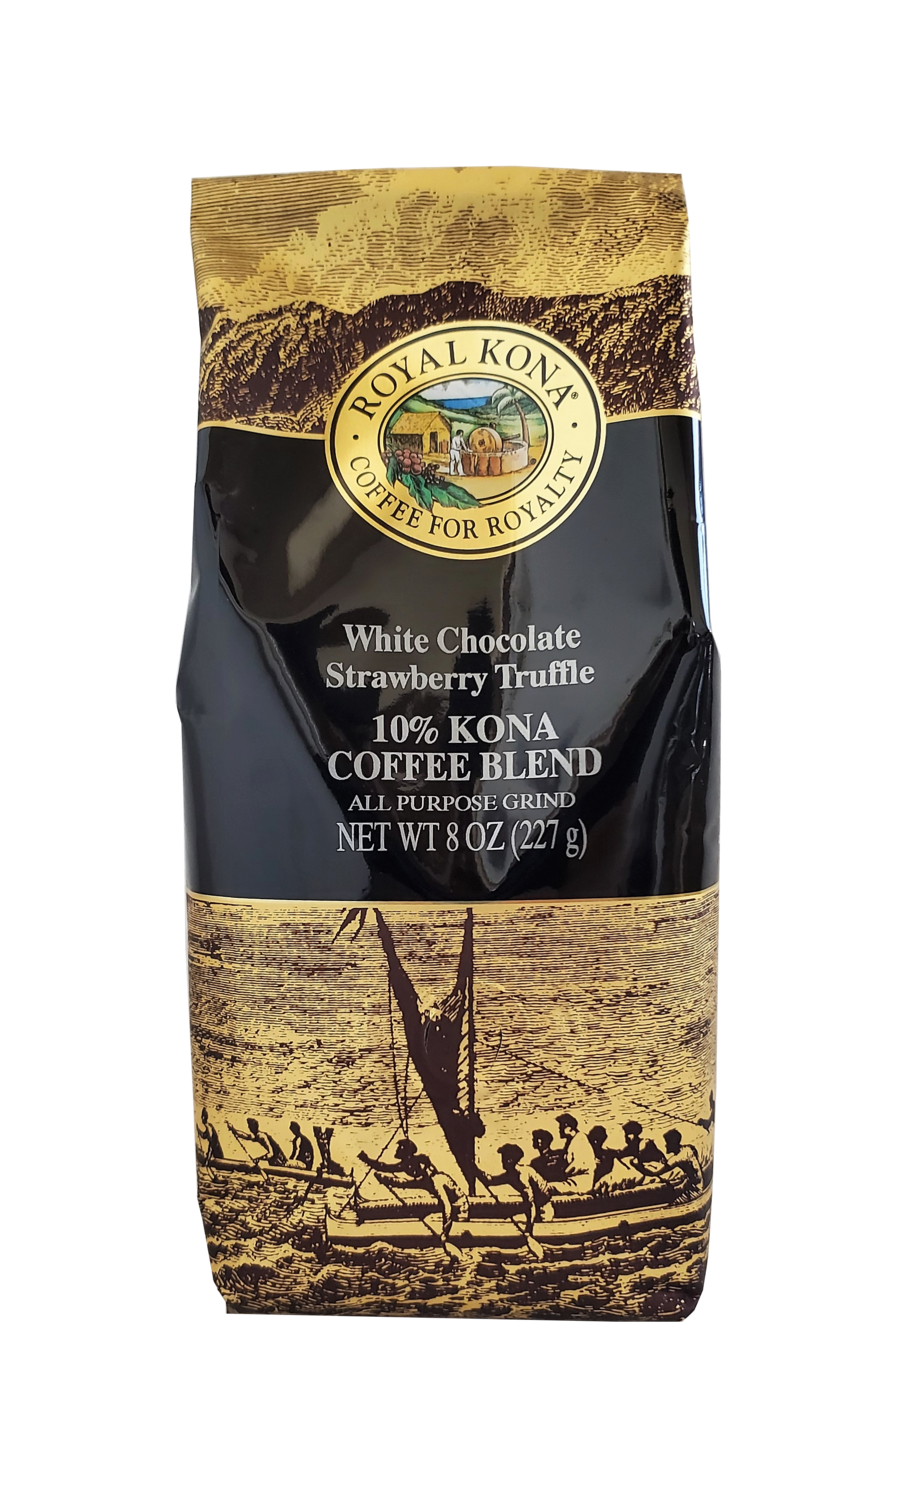 Royal Kona Coffee - White Chocolate Strawberry Truffle 10% Kona Coffee Blend 8 oz